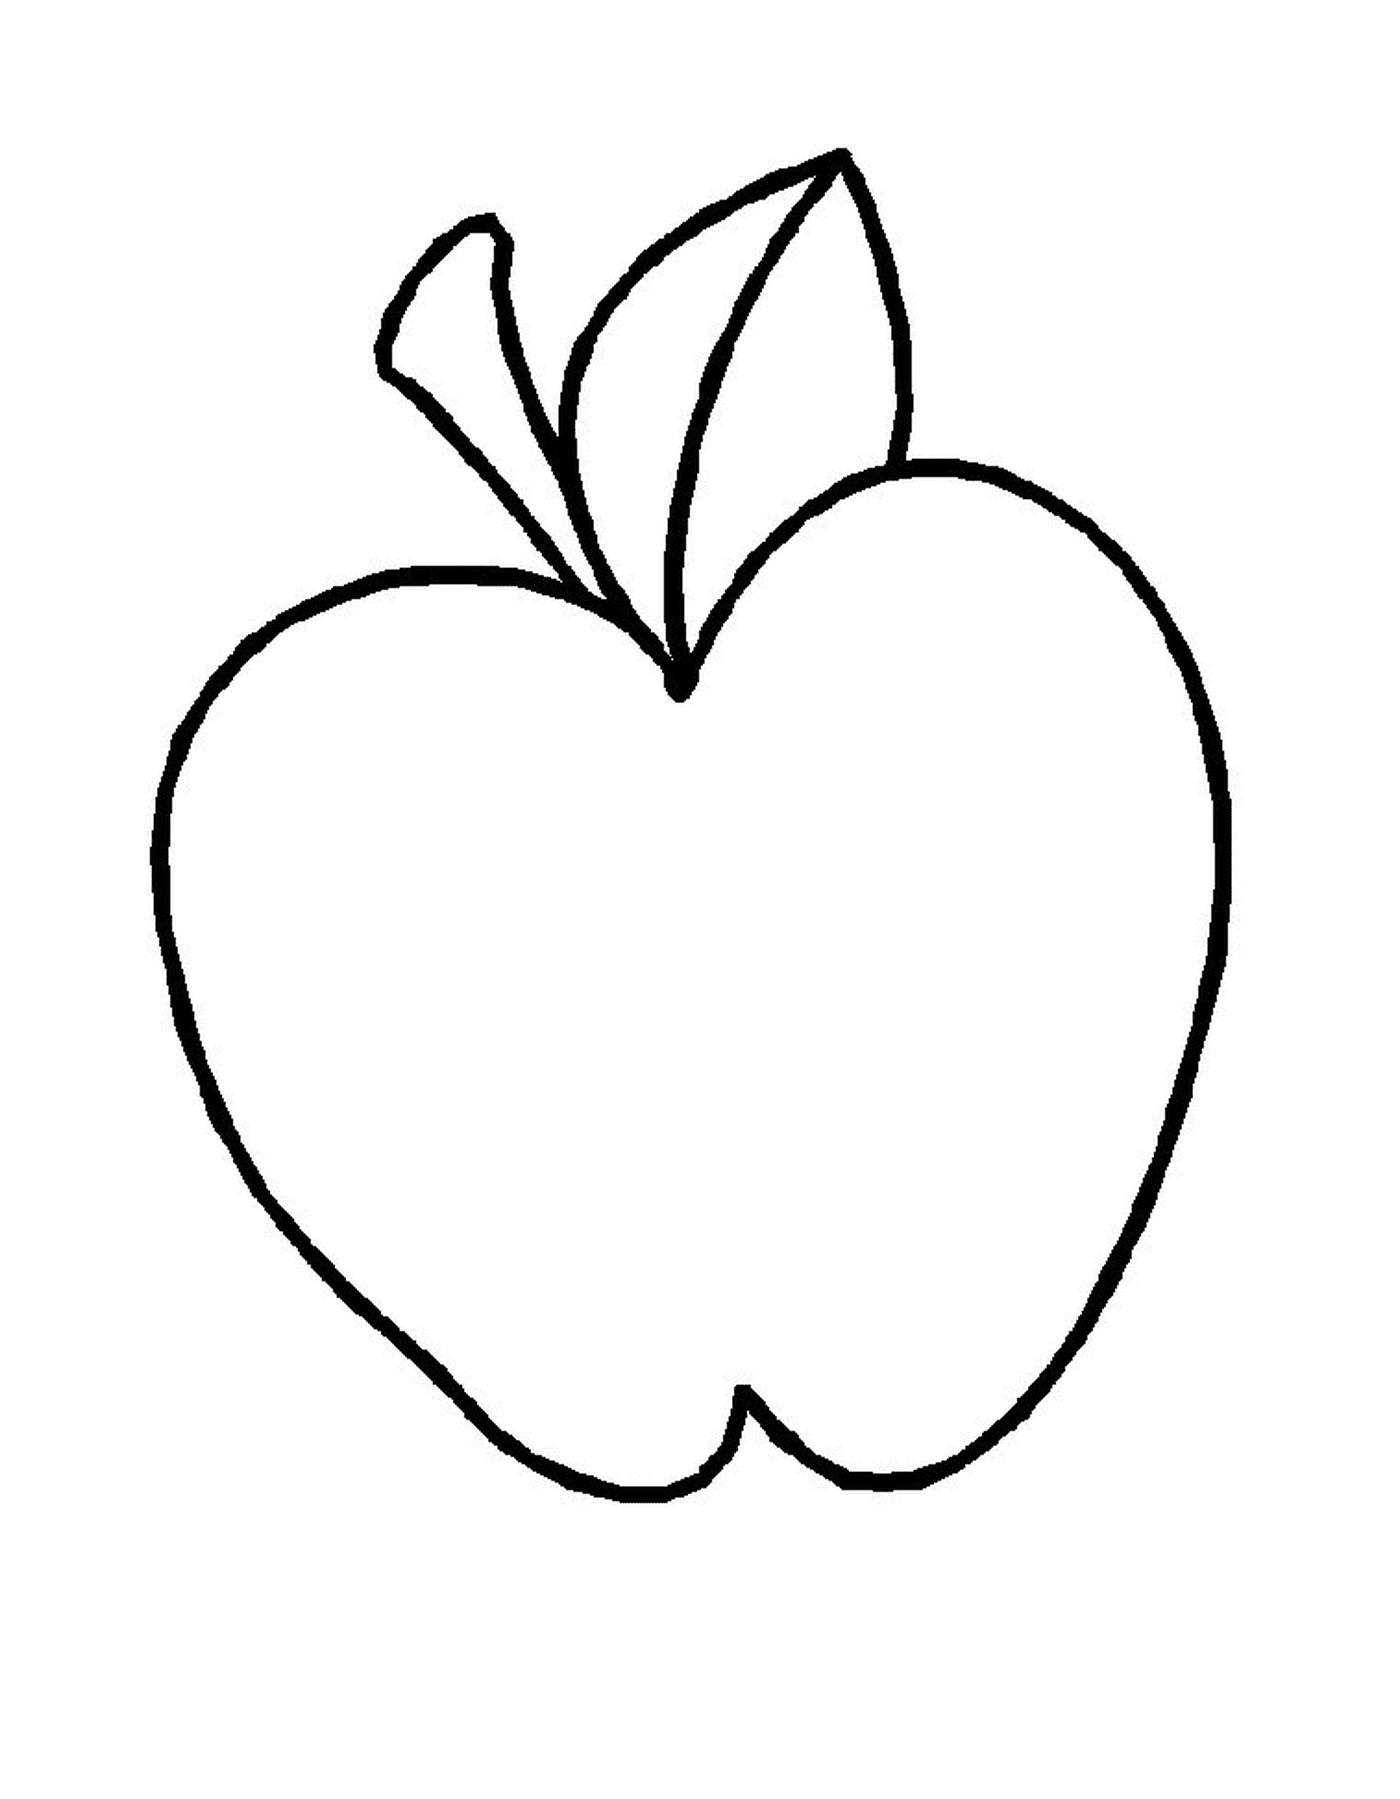  maçã agachada desenhada 